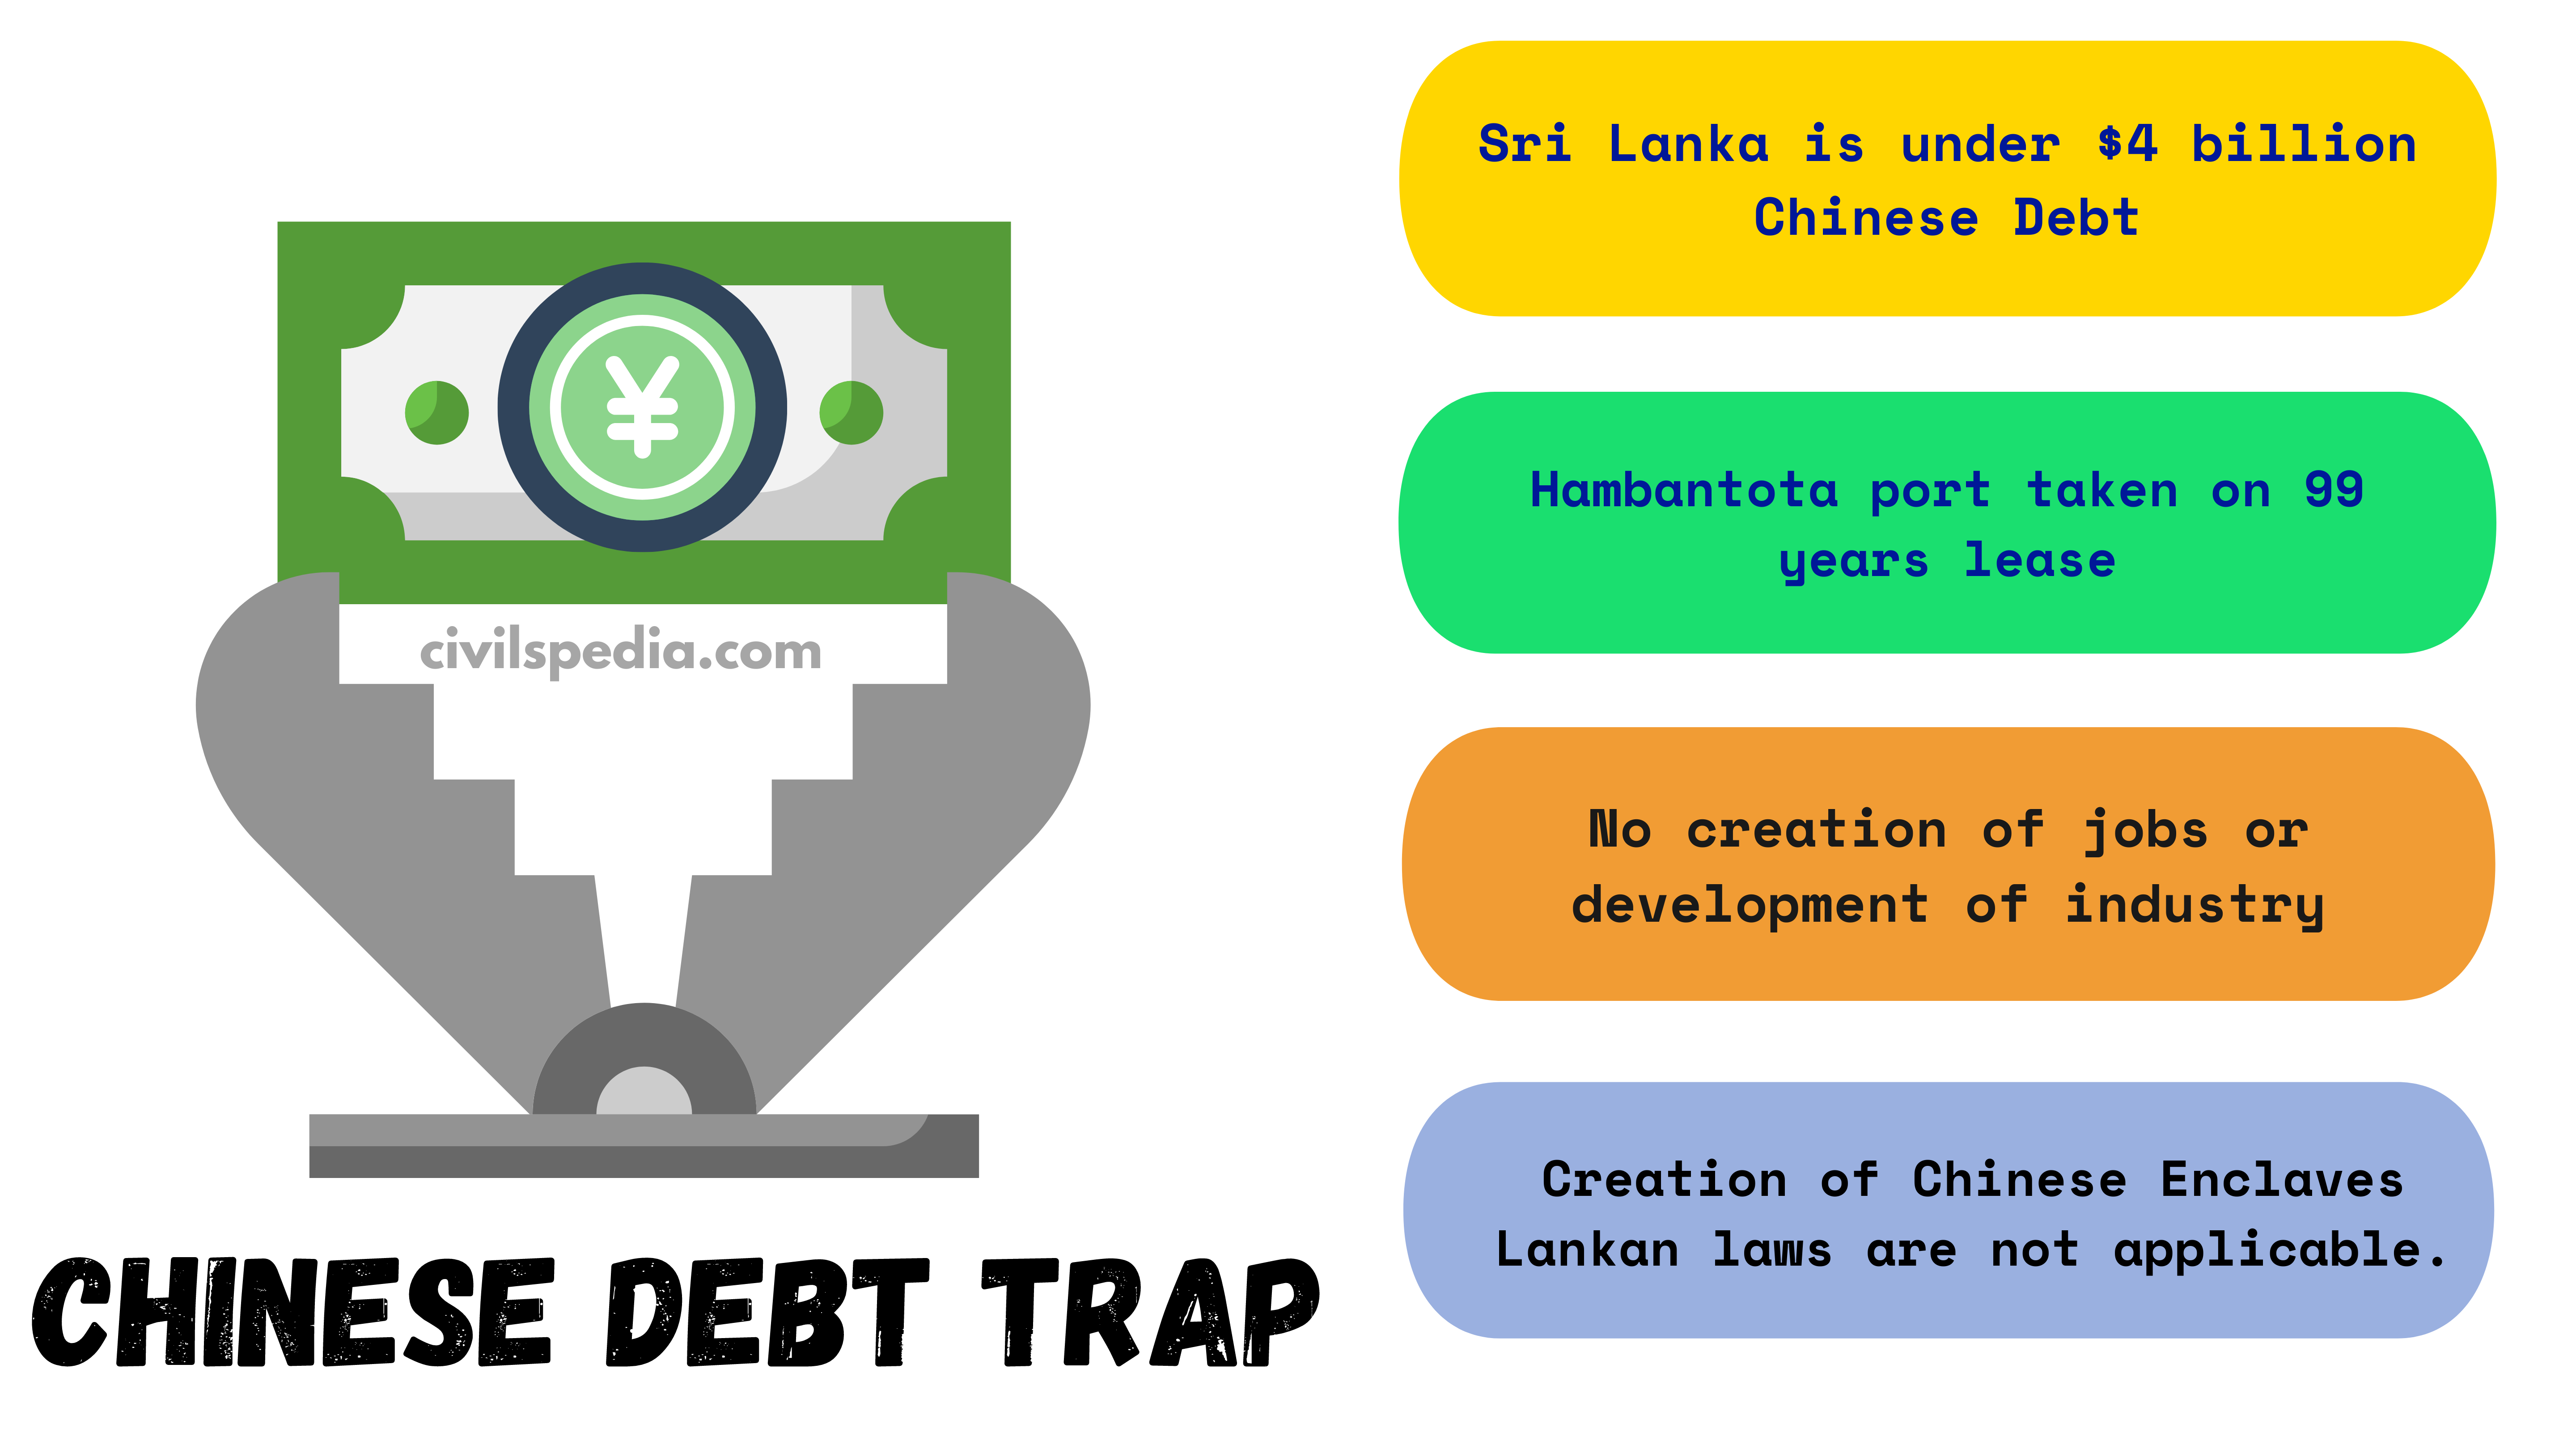 Chinese Debt Trap in Sri Lanka